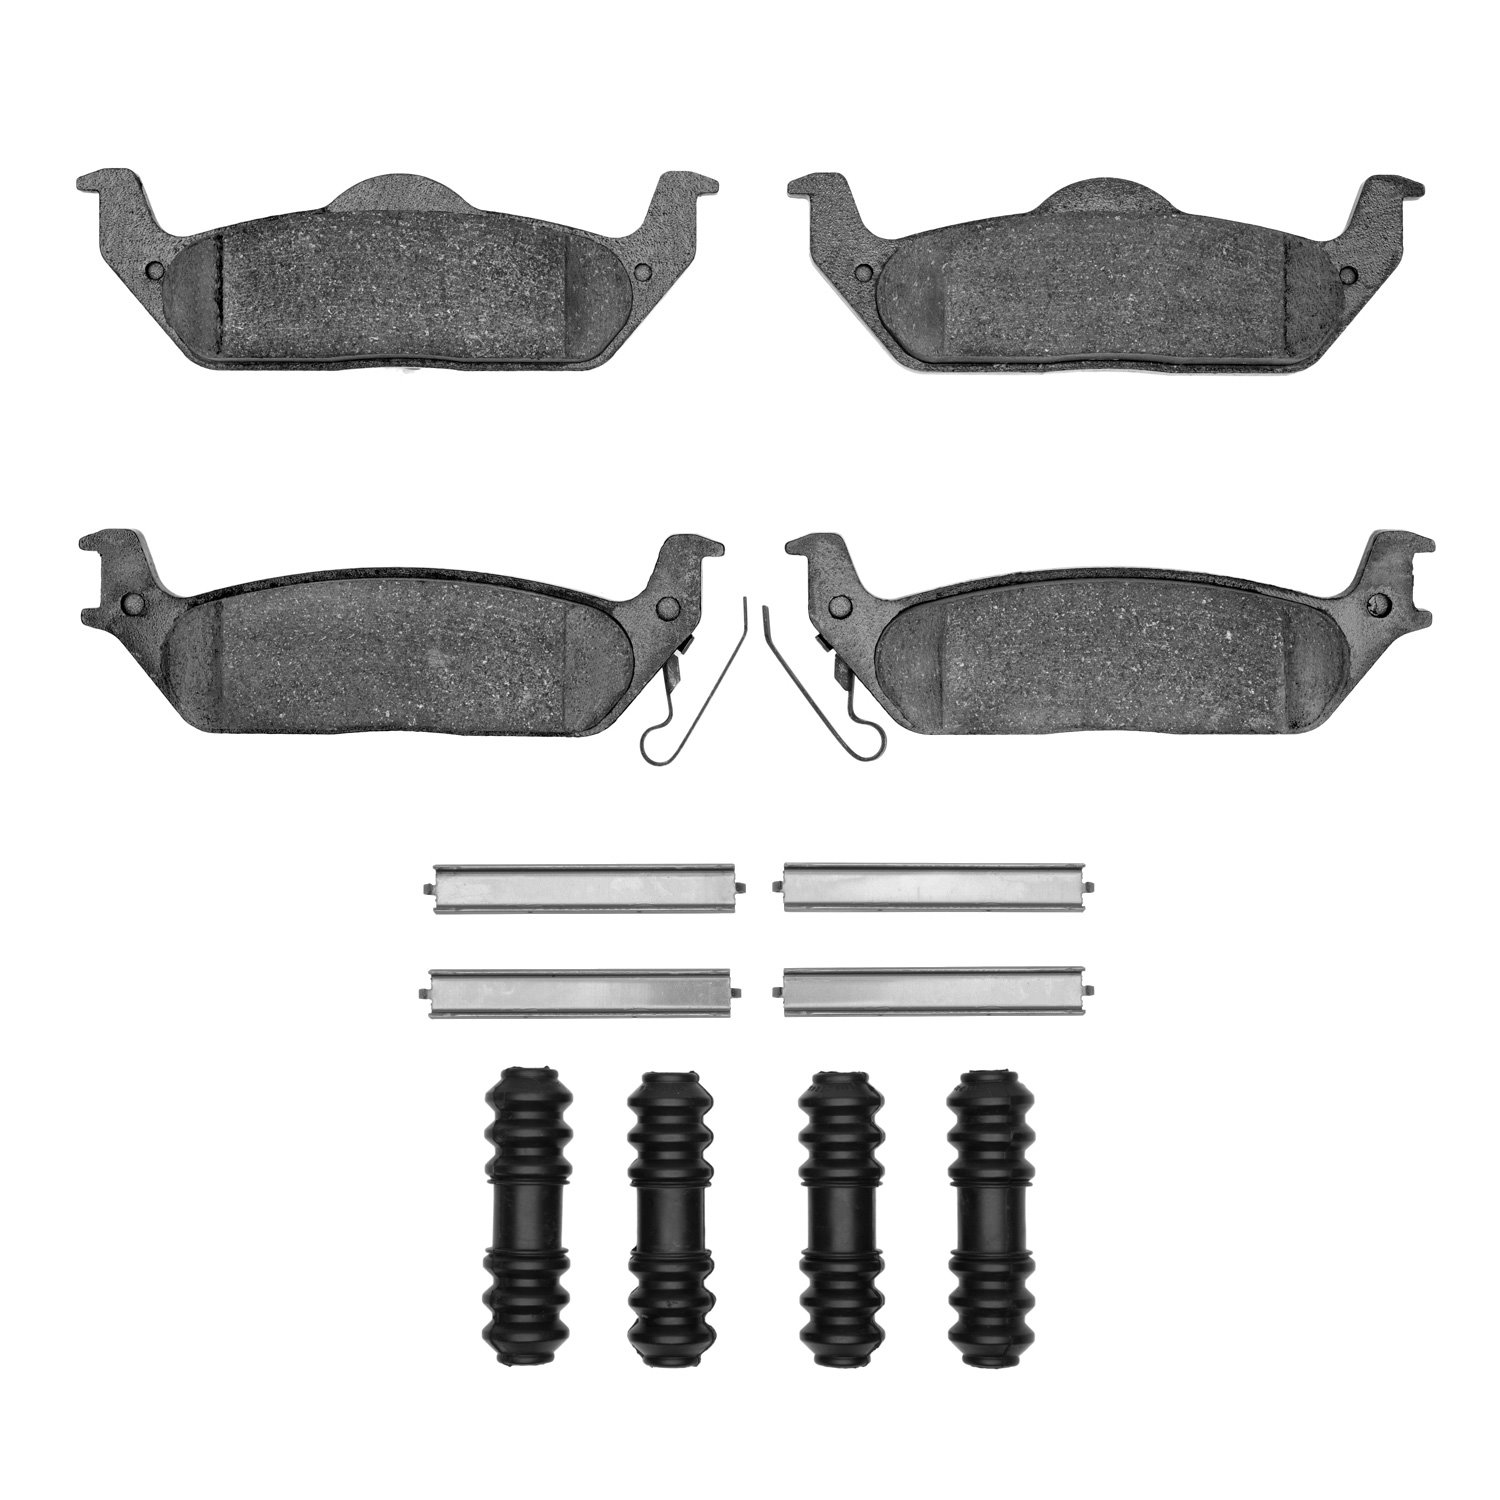 1214-1012-01 Heavy-Duty Brake Pads & Hardware Kit, 2004-2011 Ford/Lincoln/Mercury/Mazda, Position: Rear